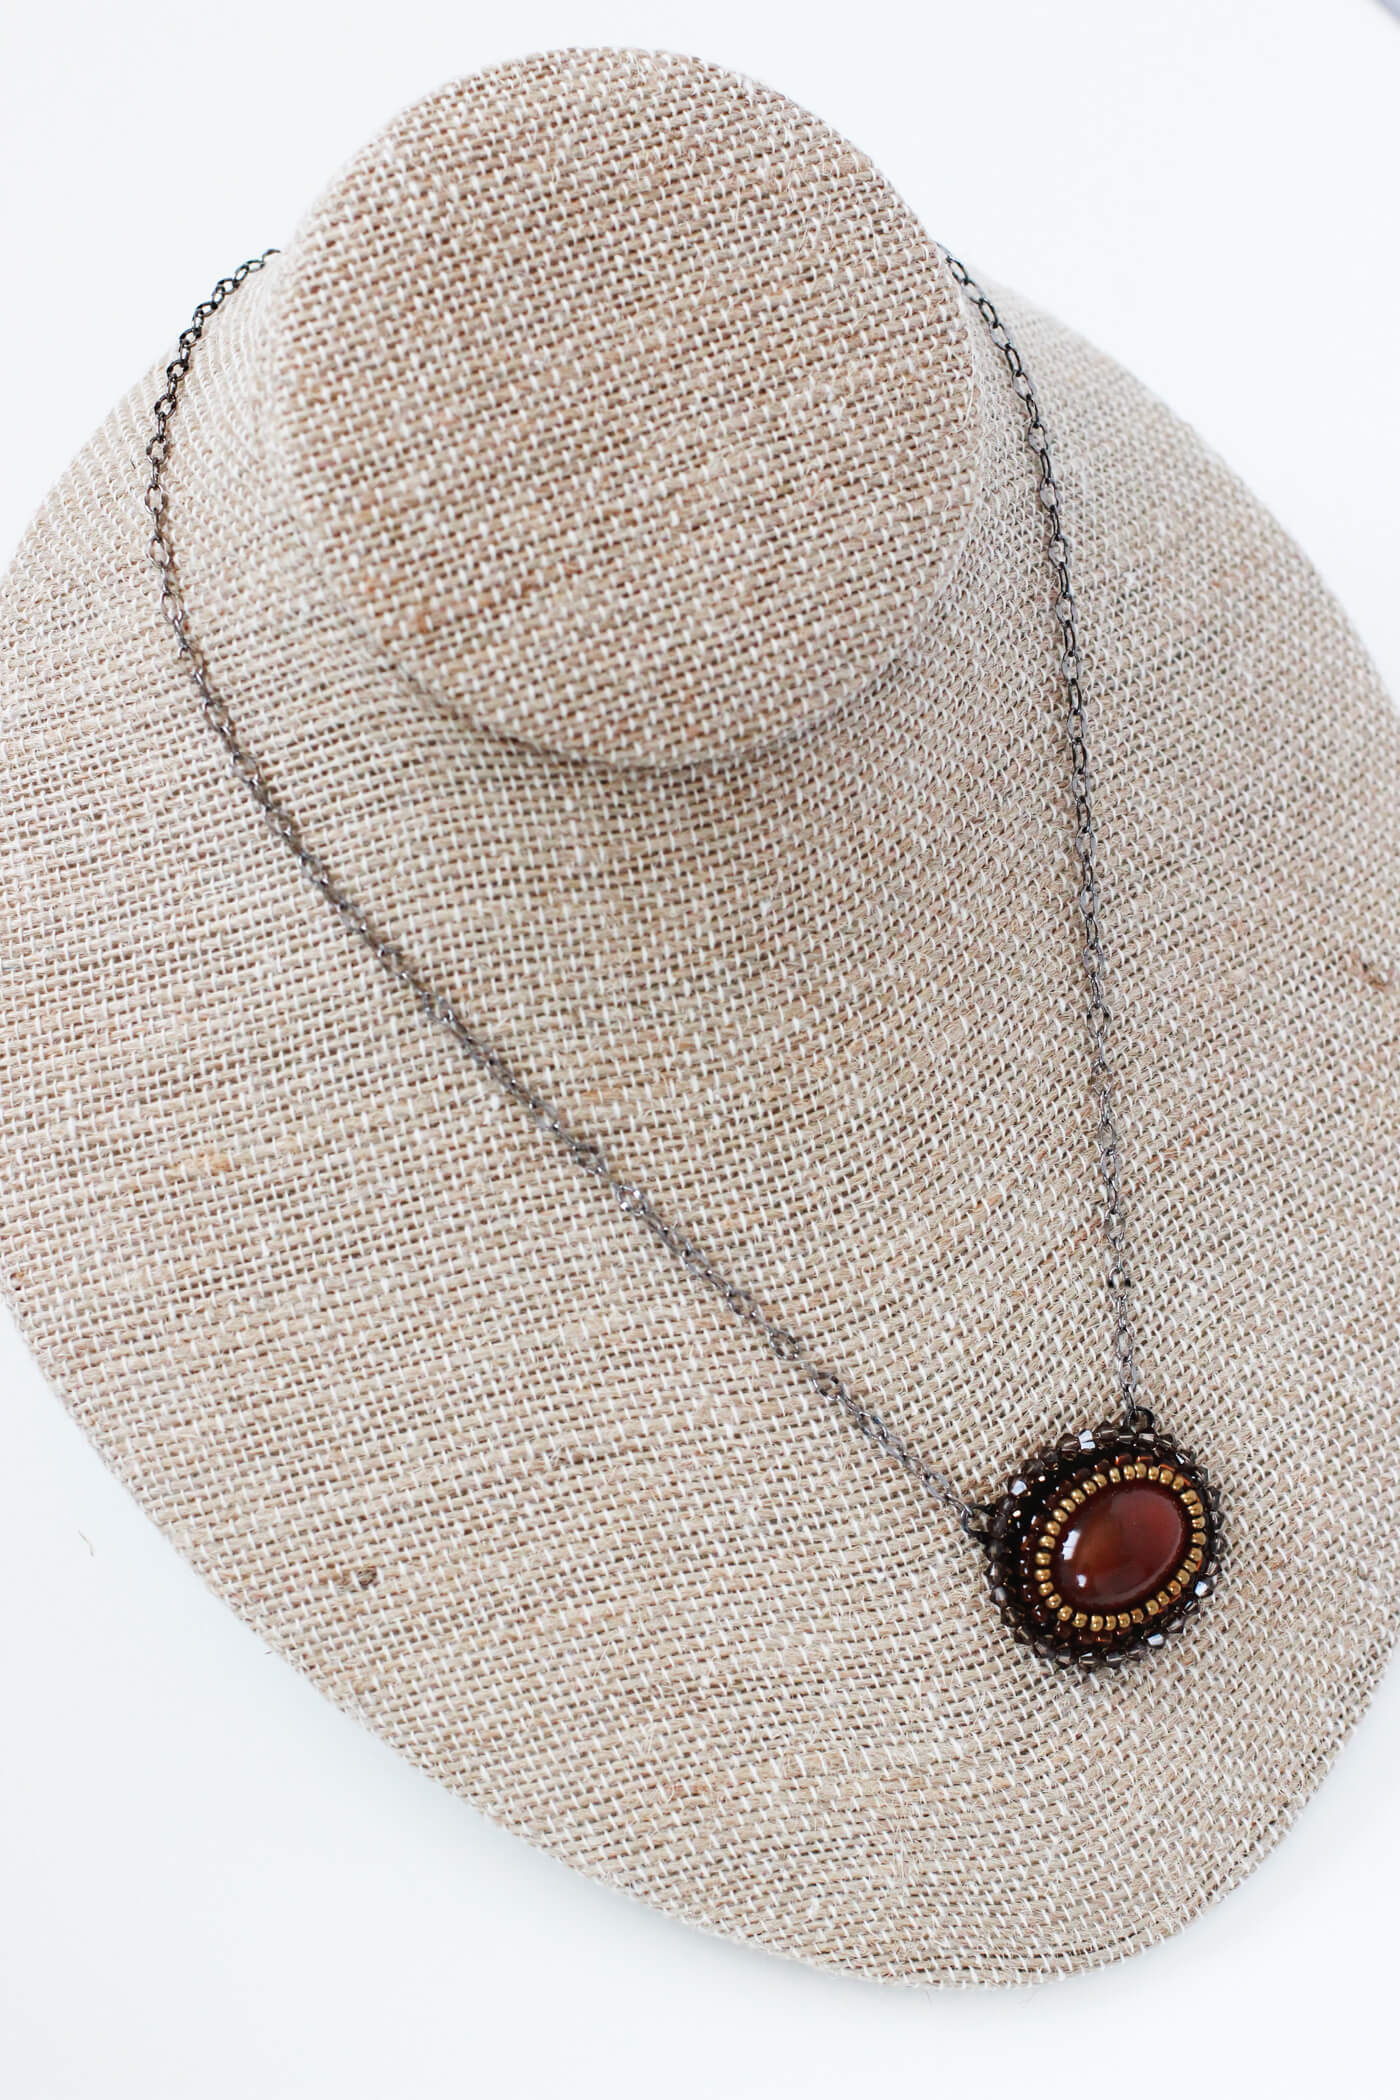 Carnelian-Beaded-Gemstone-Necklace Gift - Handmade Designer Necklace by Kaleidoscopes And Polka Dots